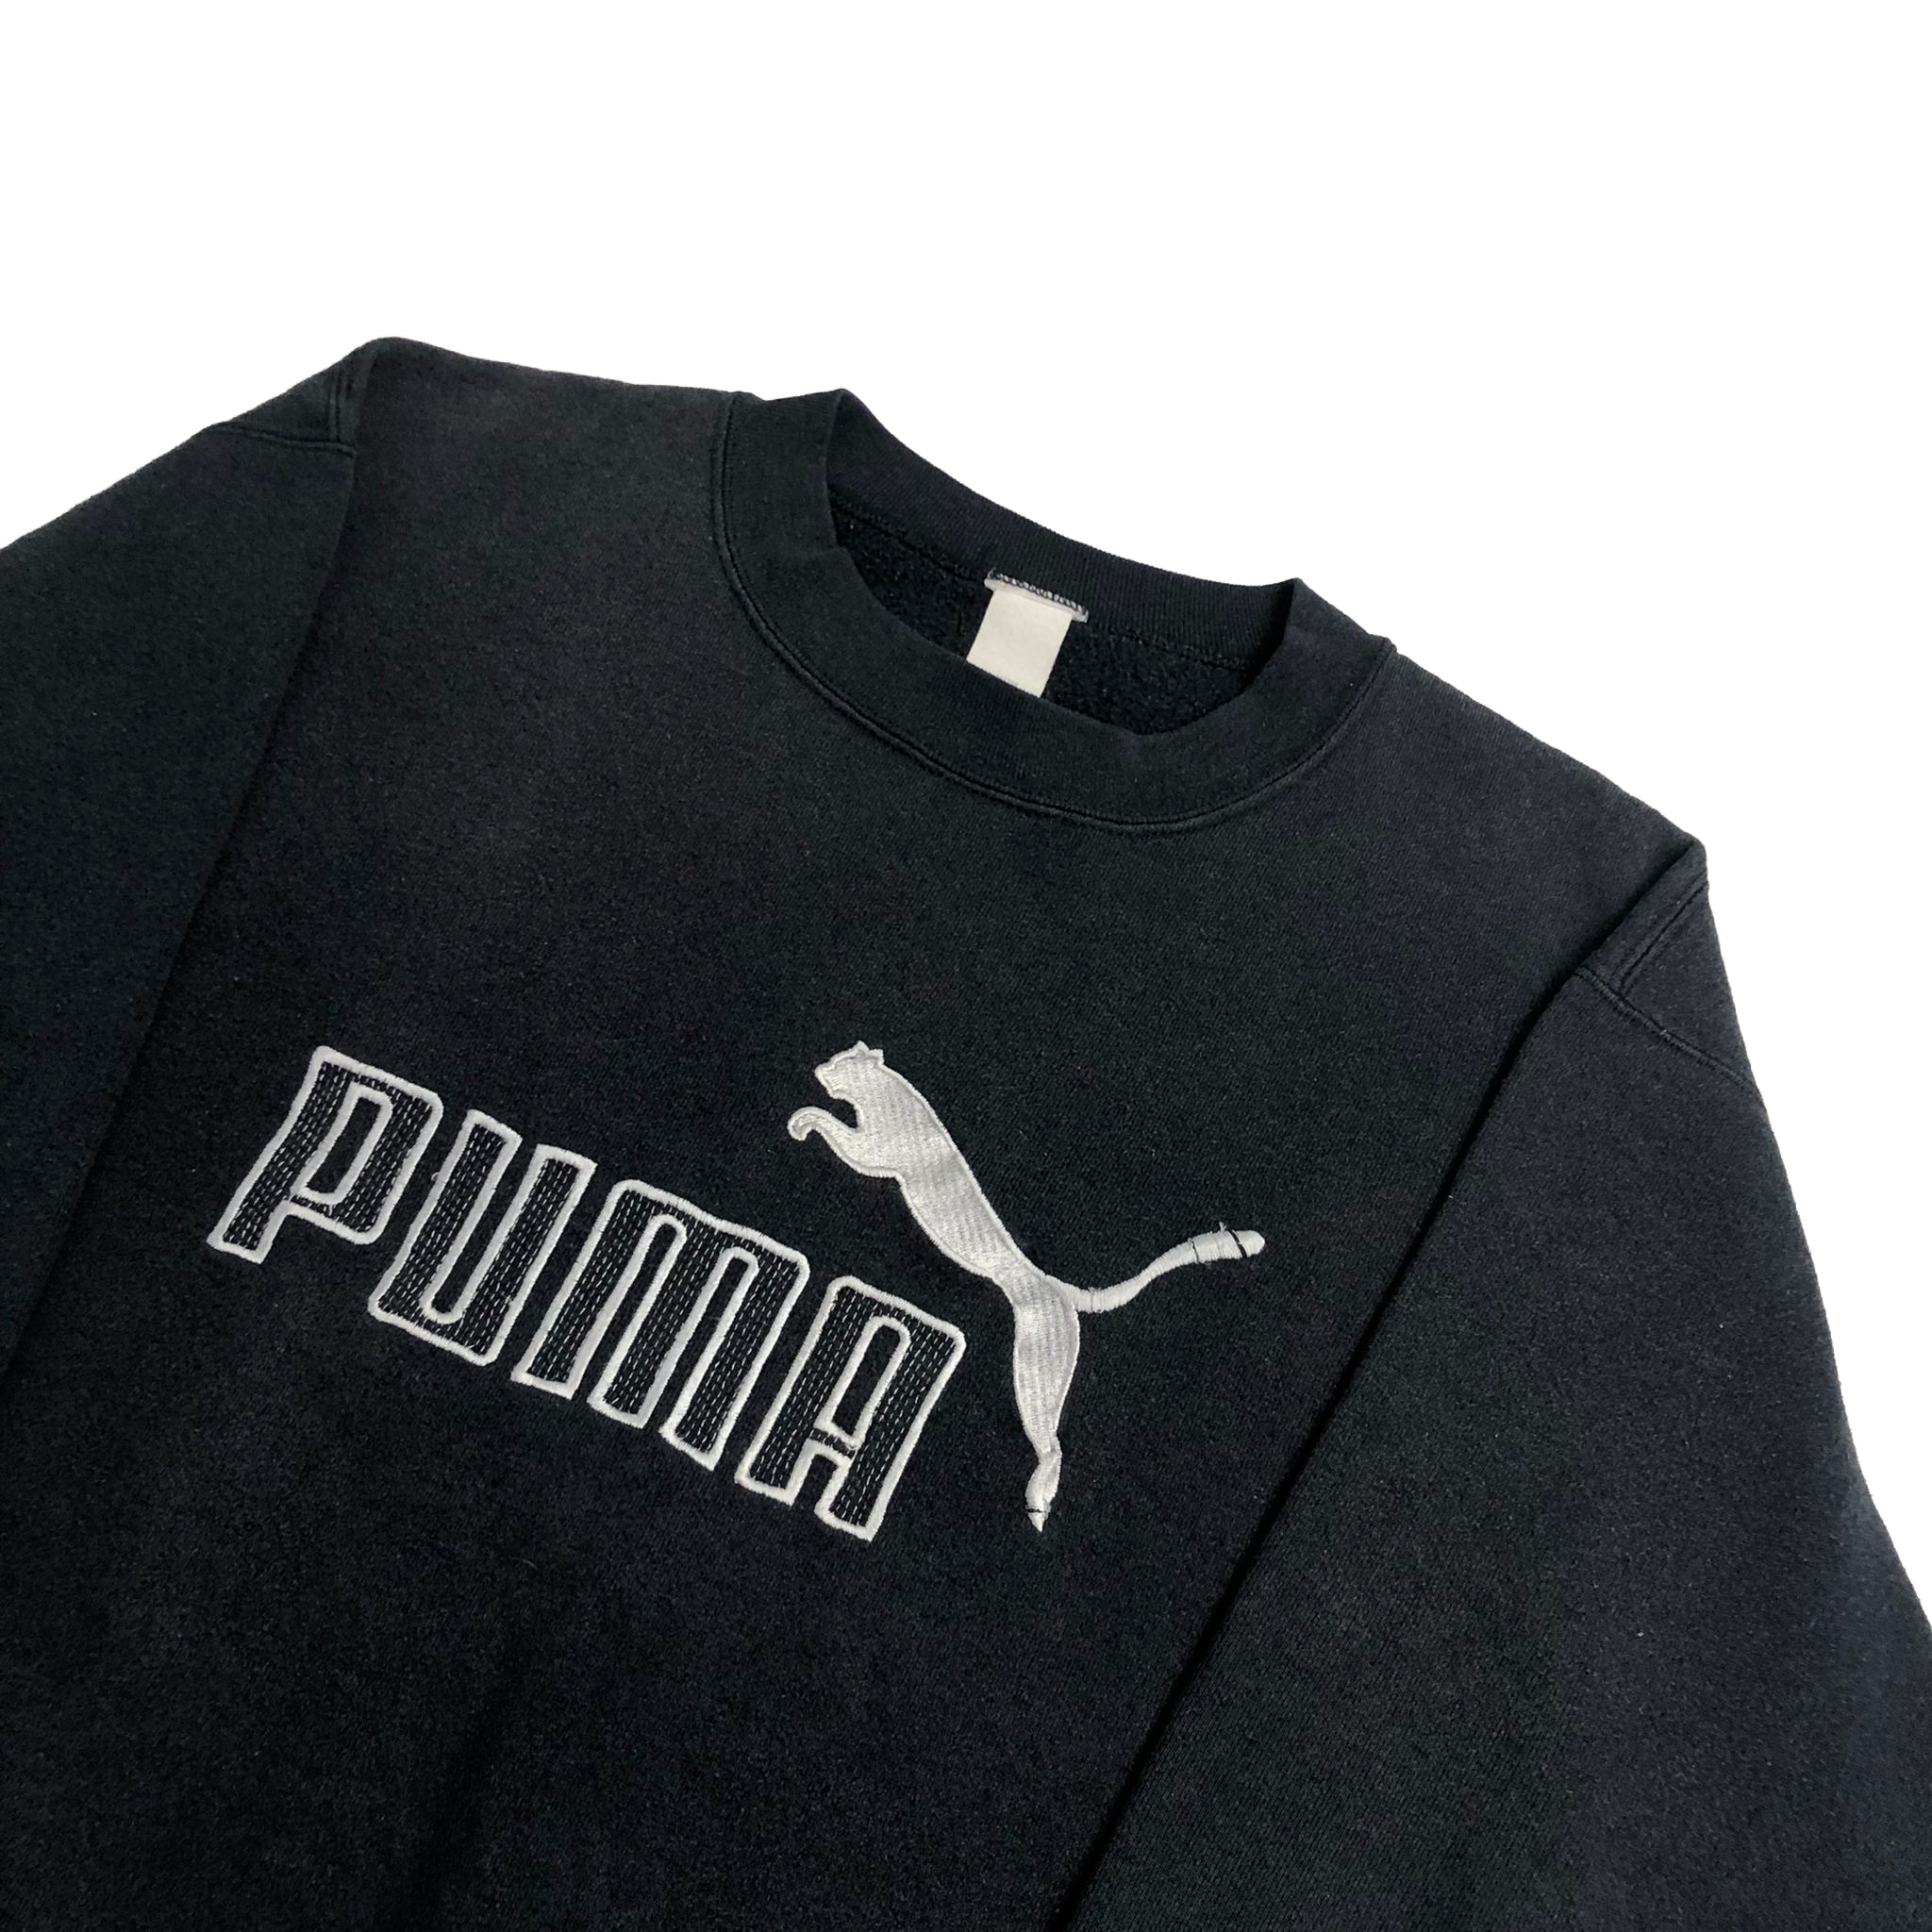 90's Puma sweatshirt